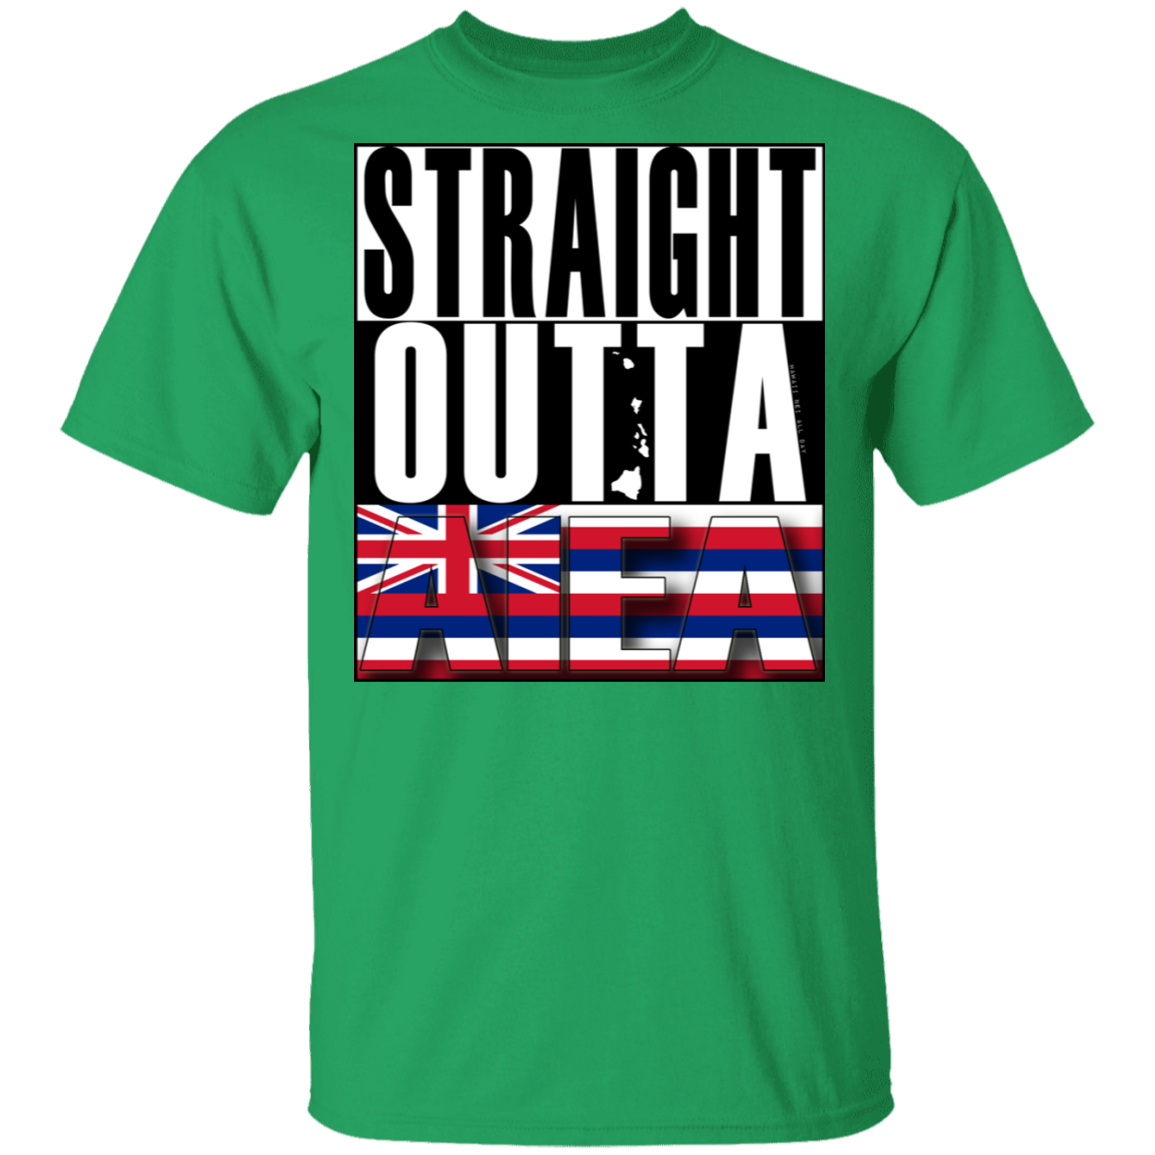 Straight Outta Aiea T-Shirt, T-Shirts, Hawaii Nei All Day